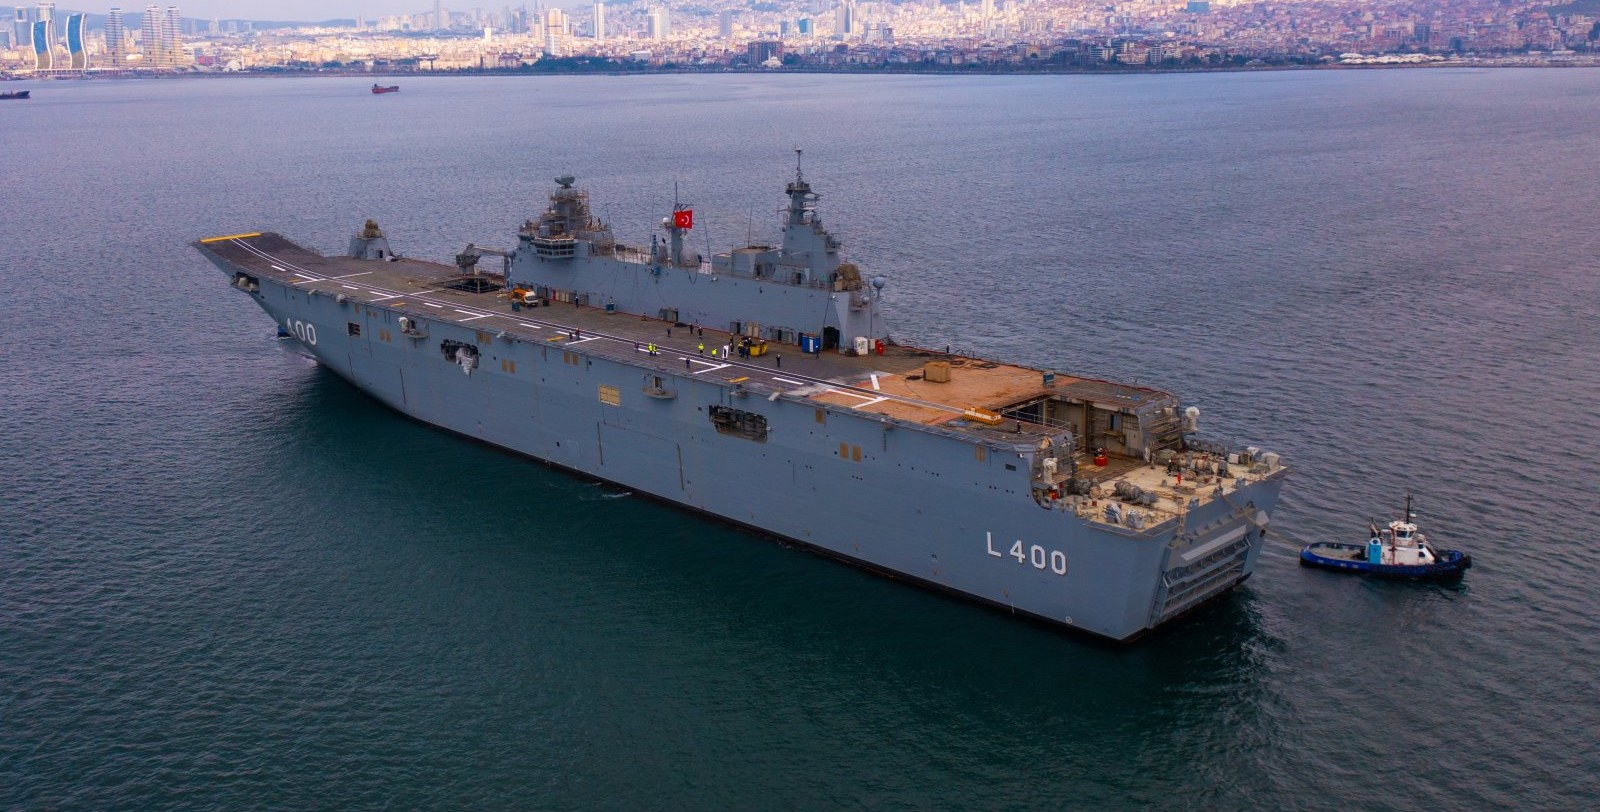 Türkiye commissions largest warship aka world’s 1st drone carrier